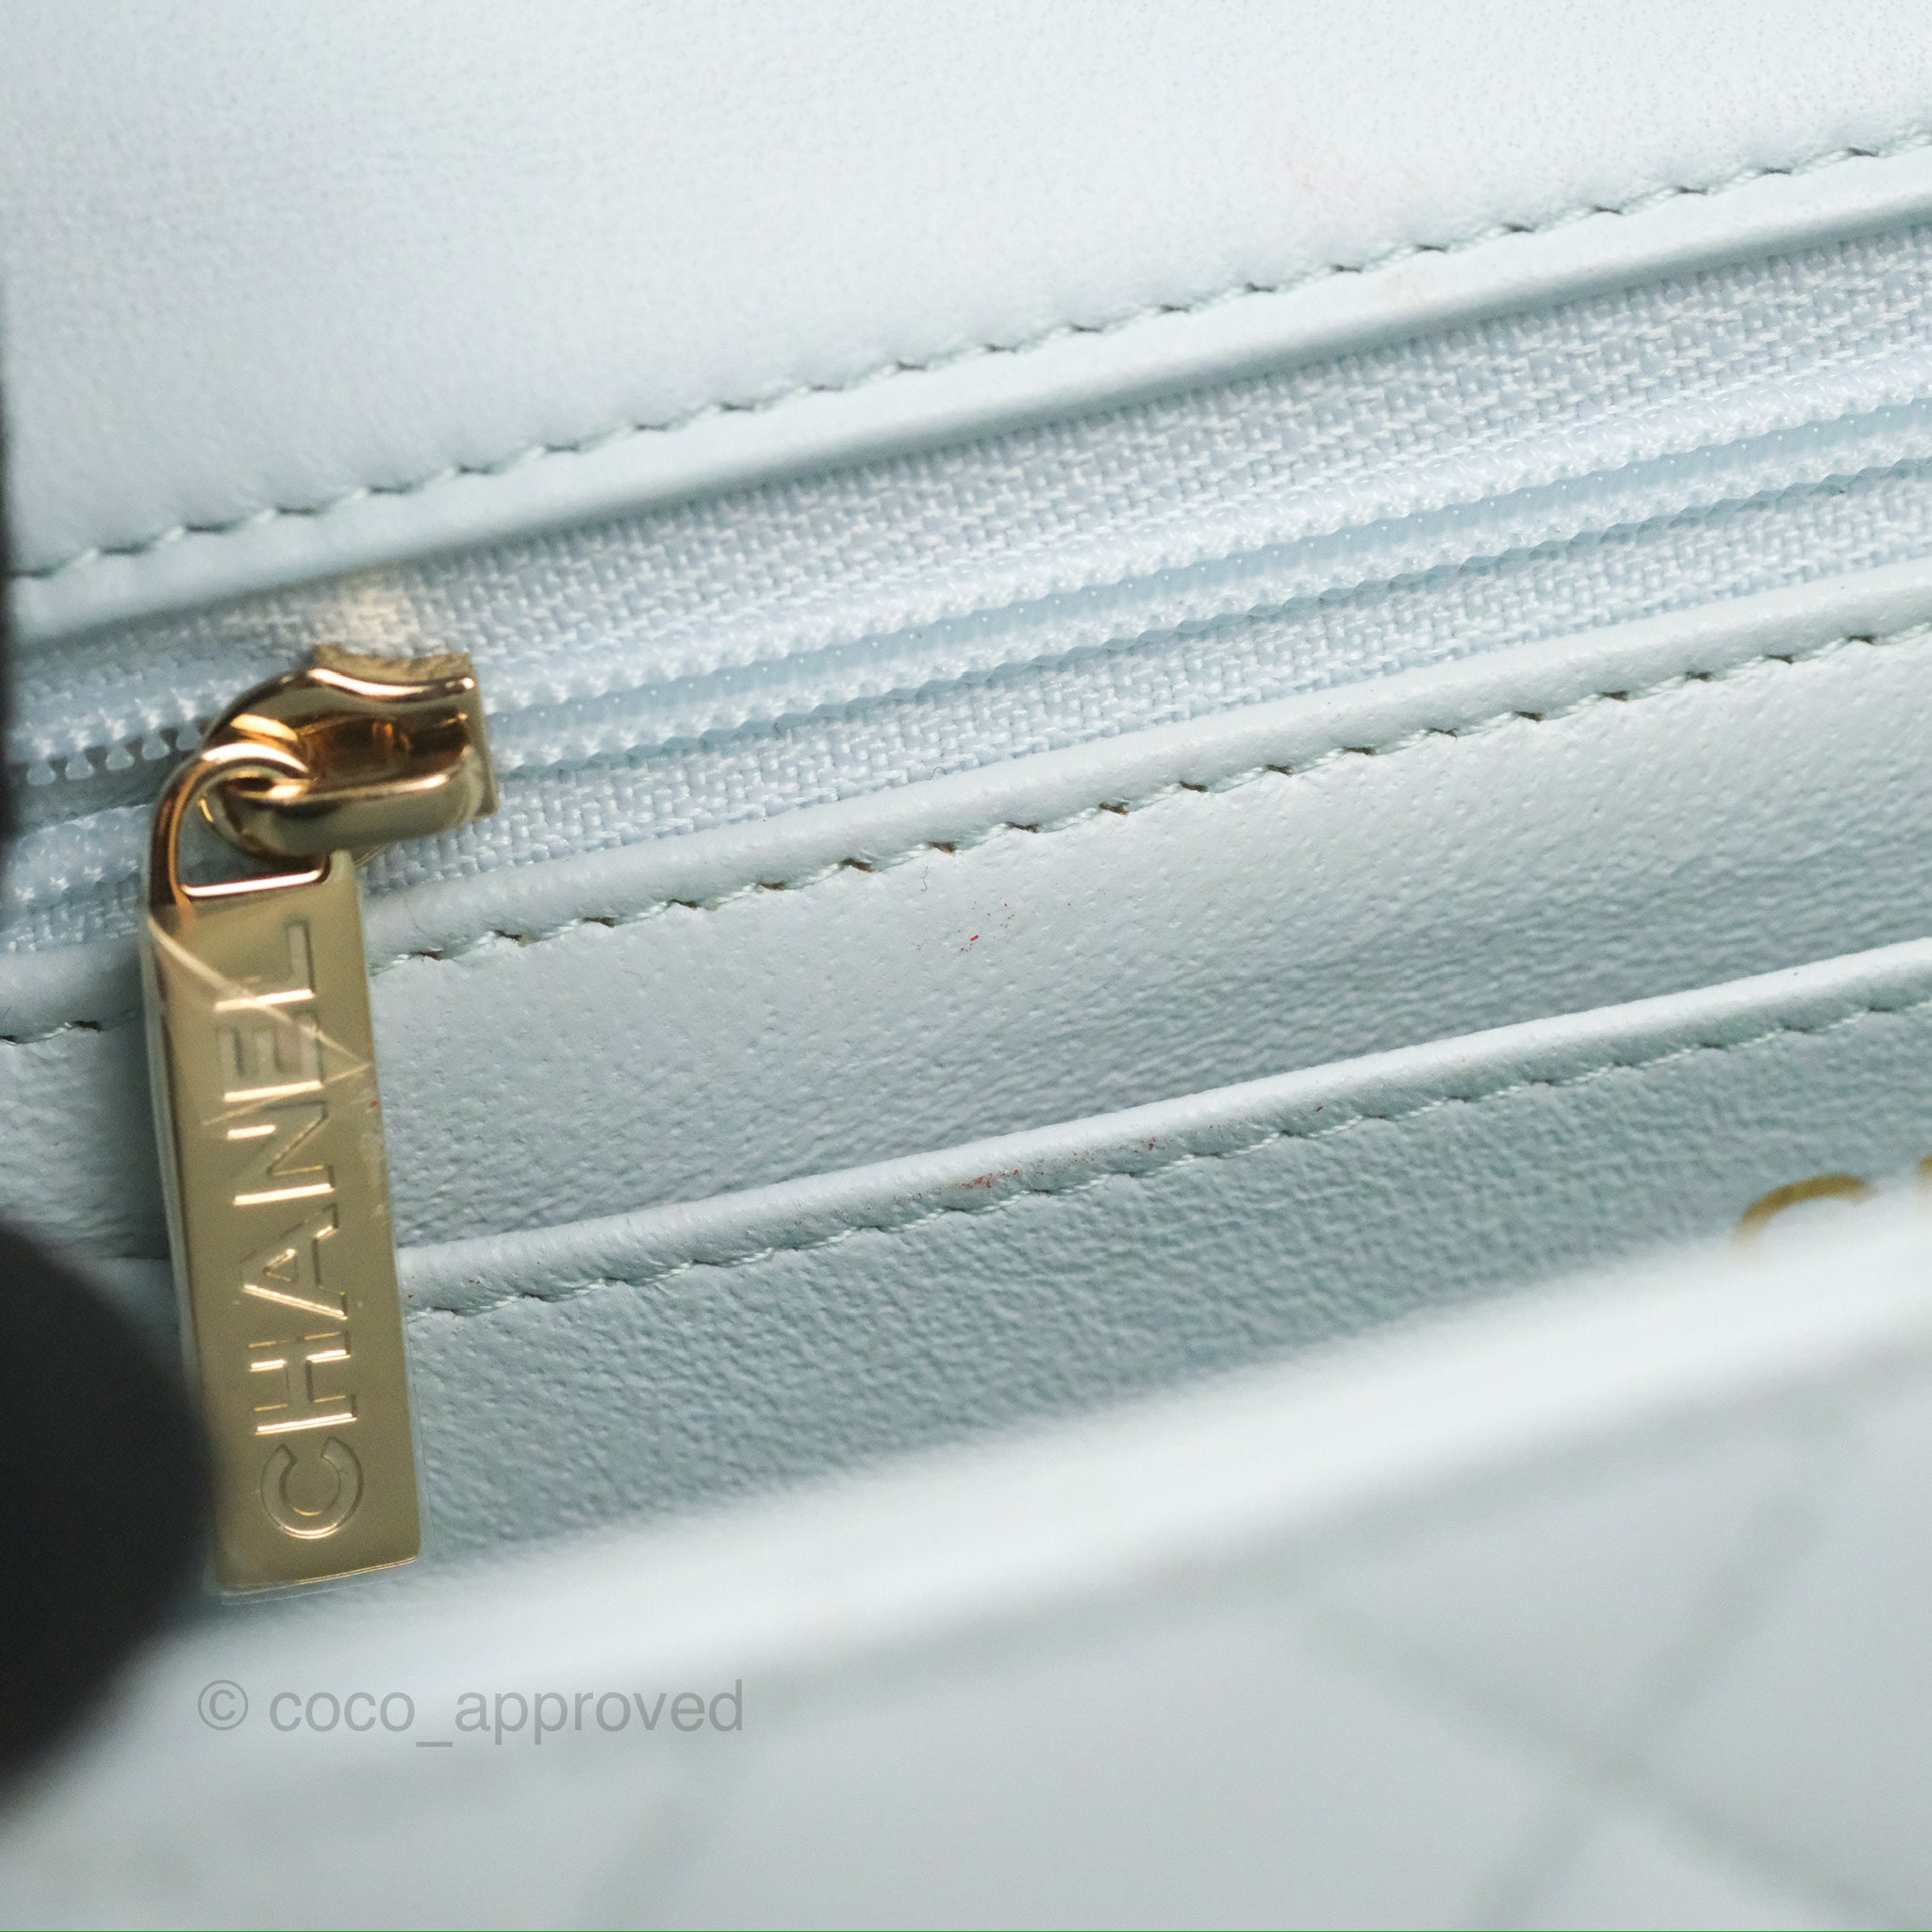 Chanel Top Handle Mini Rectangular Flap Bag Light Blue Lambskin